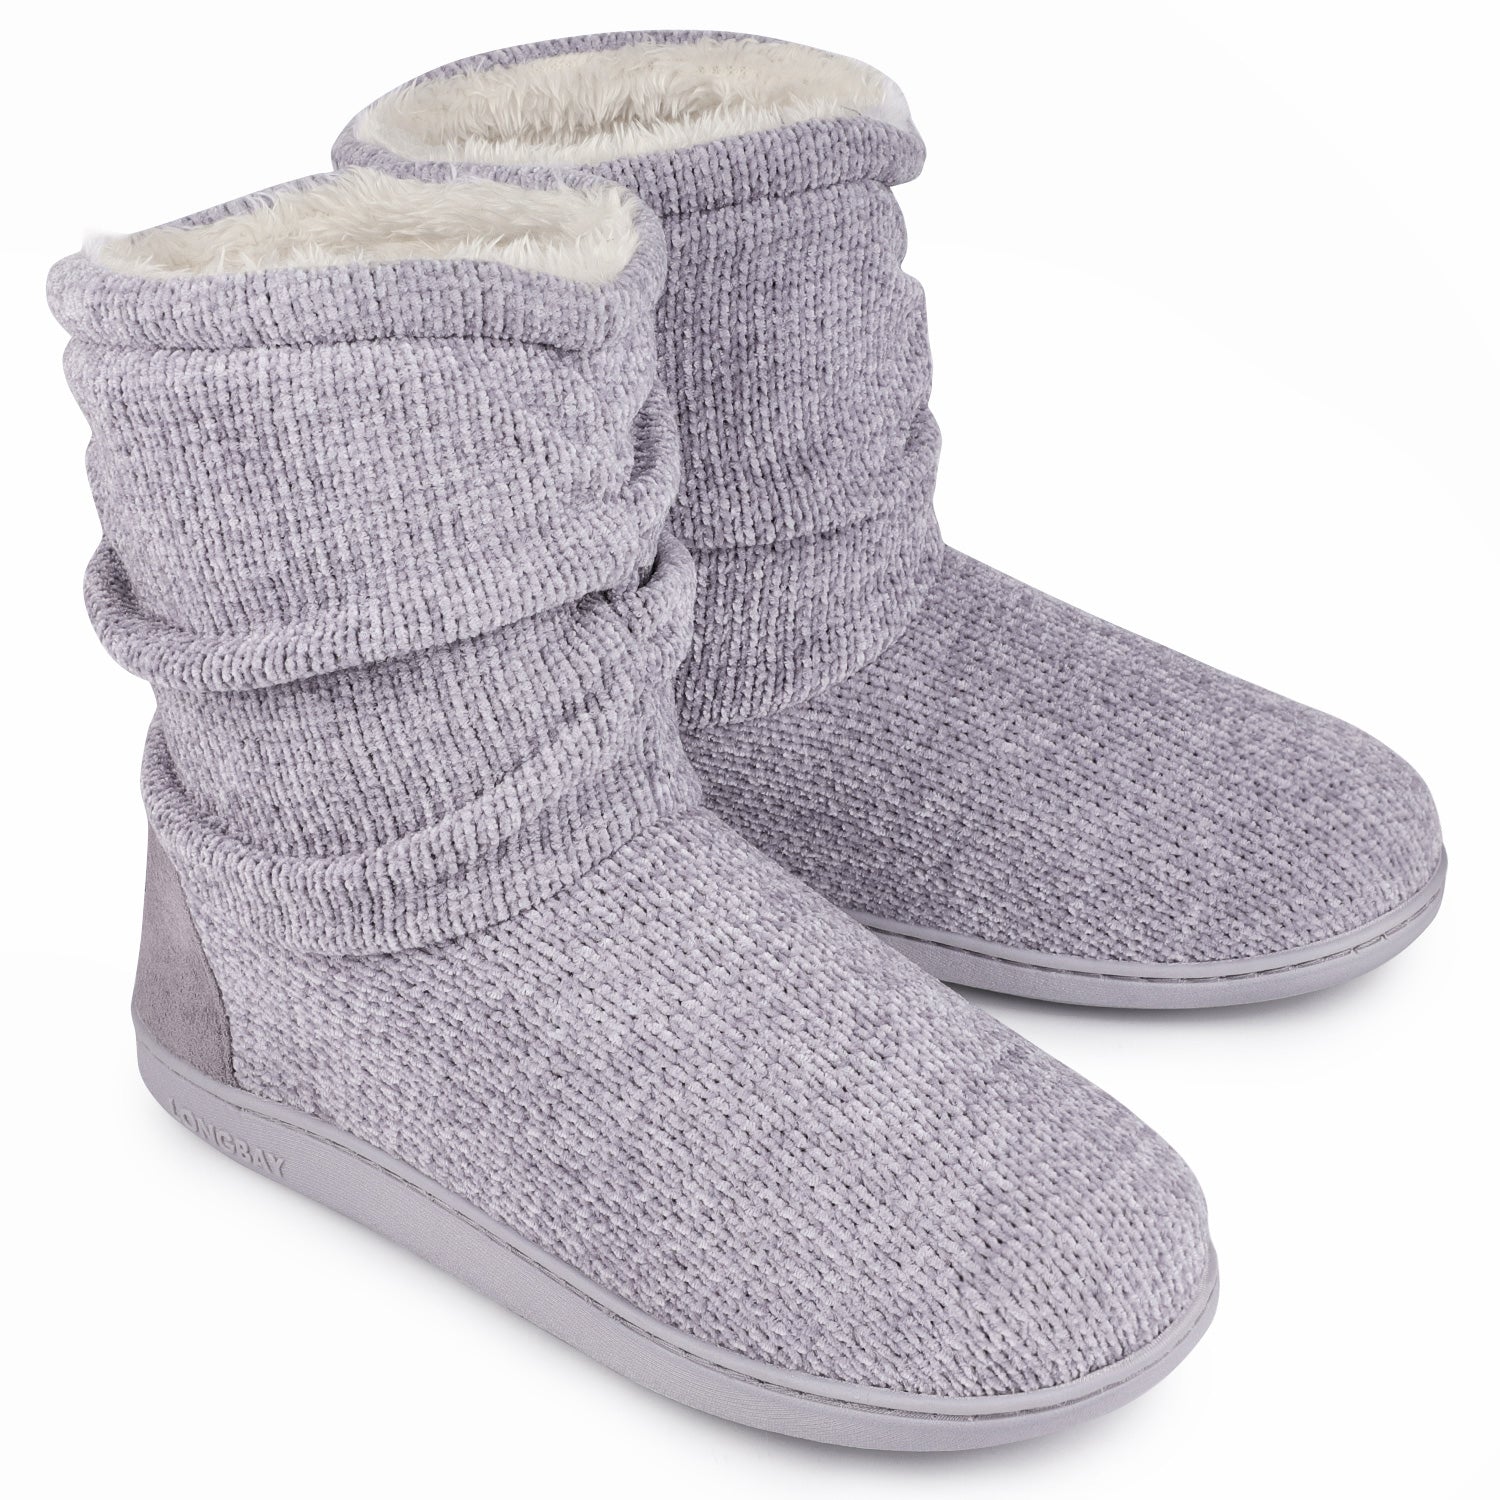 Fuji Women's Chenille Knit Bootie Slippers - Grey - The Marquet, UK Slipper Wholesaler & Distributor